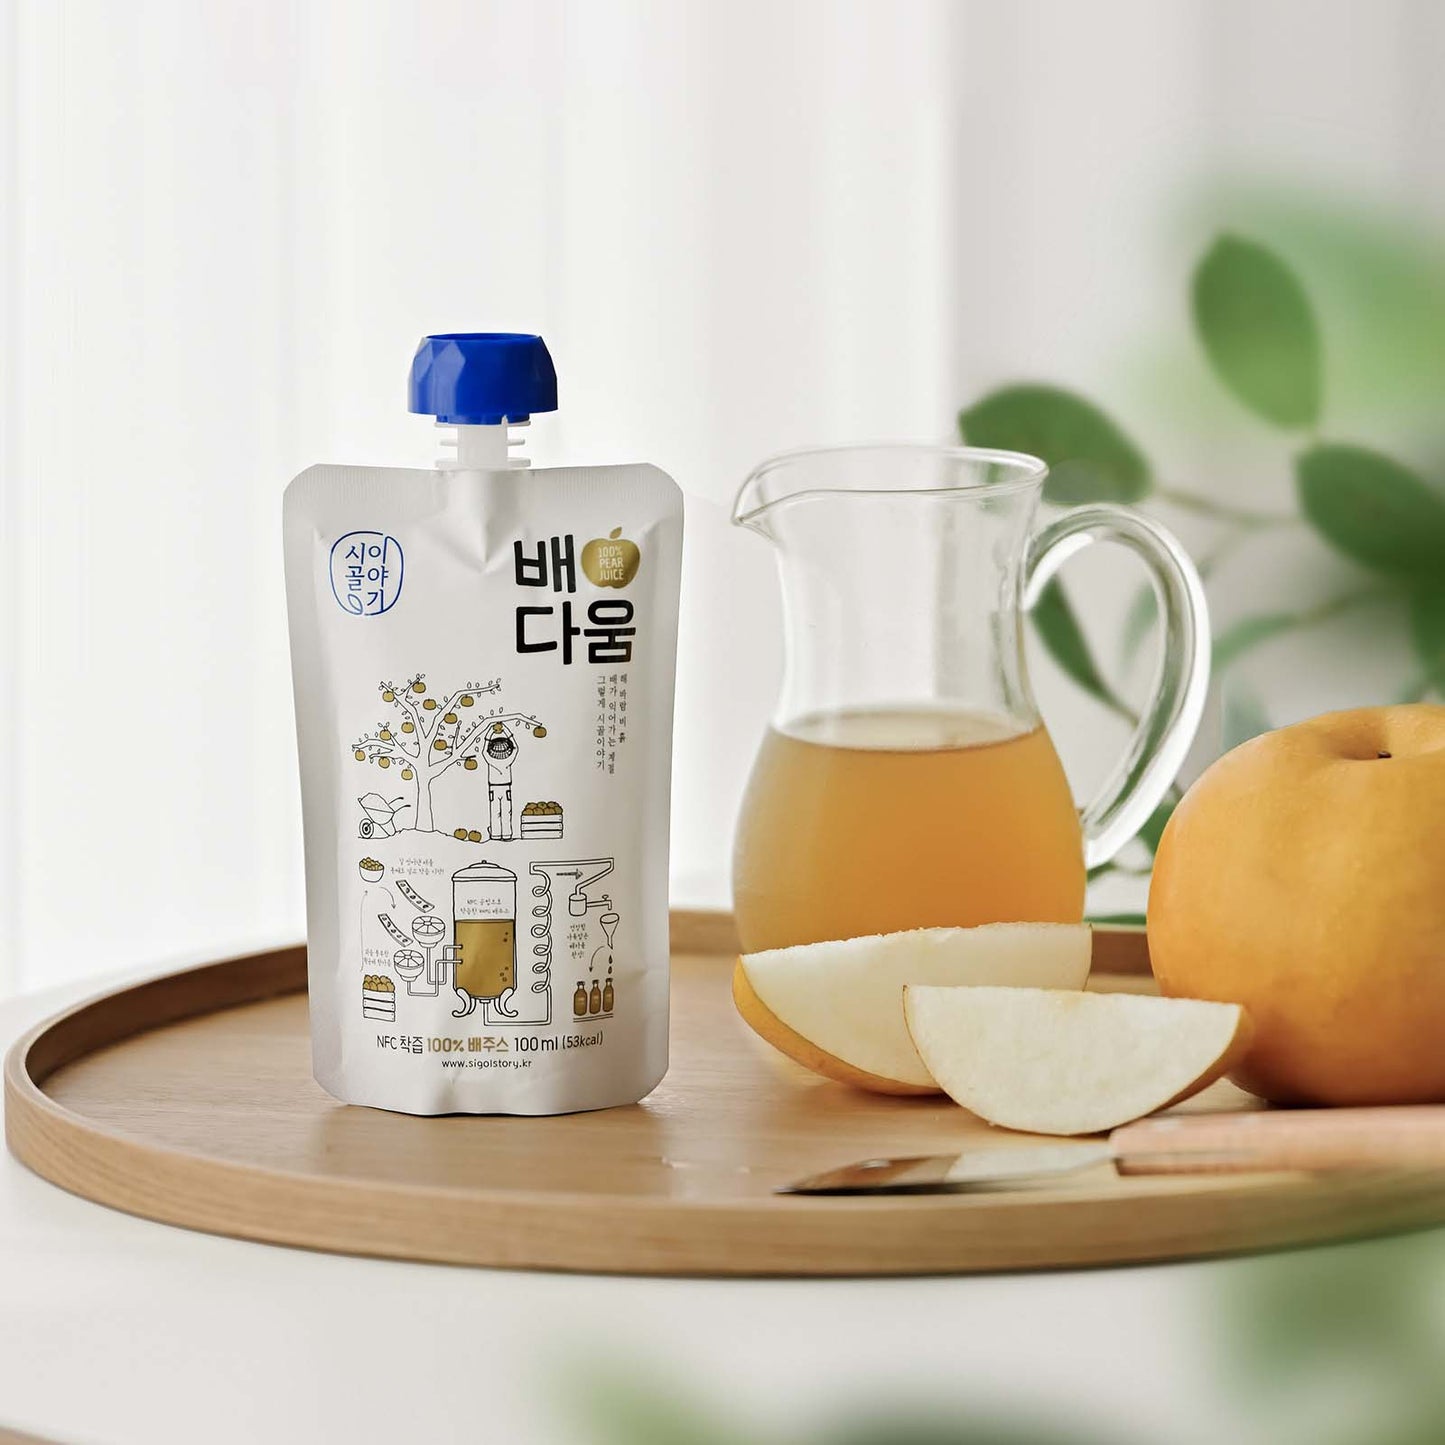 Sigolstory - NFC Korean Pear Juice 100ml